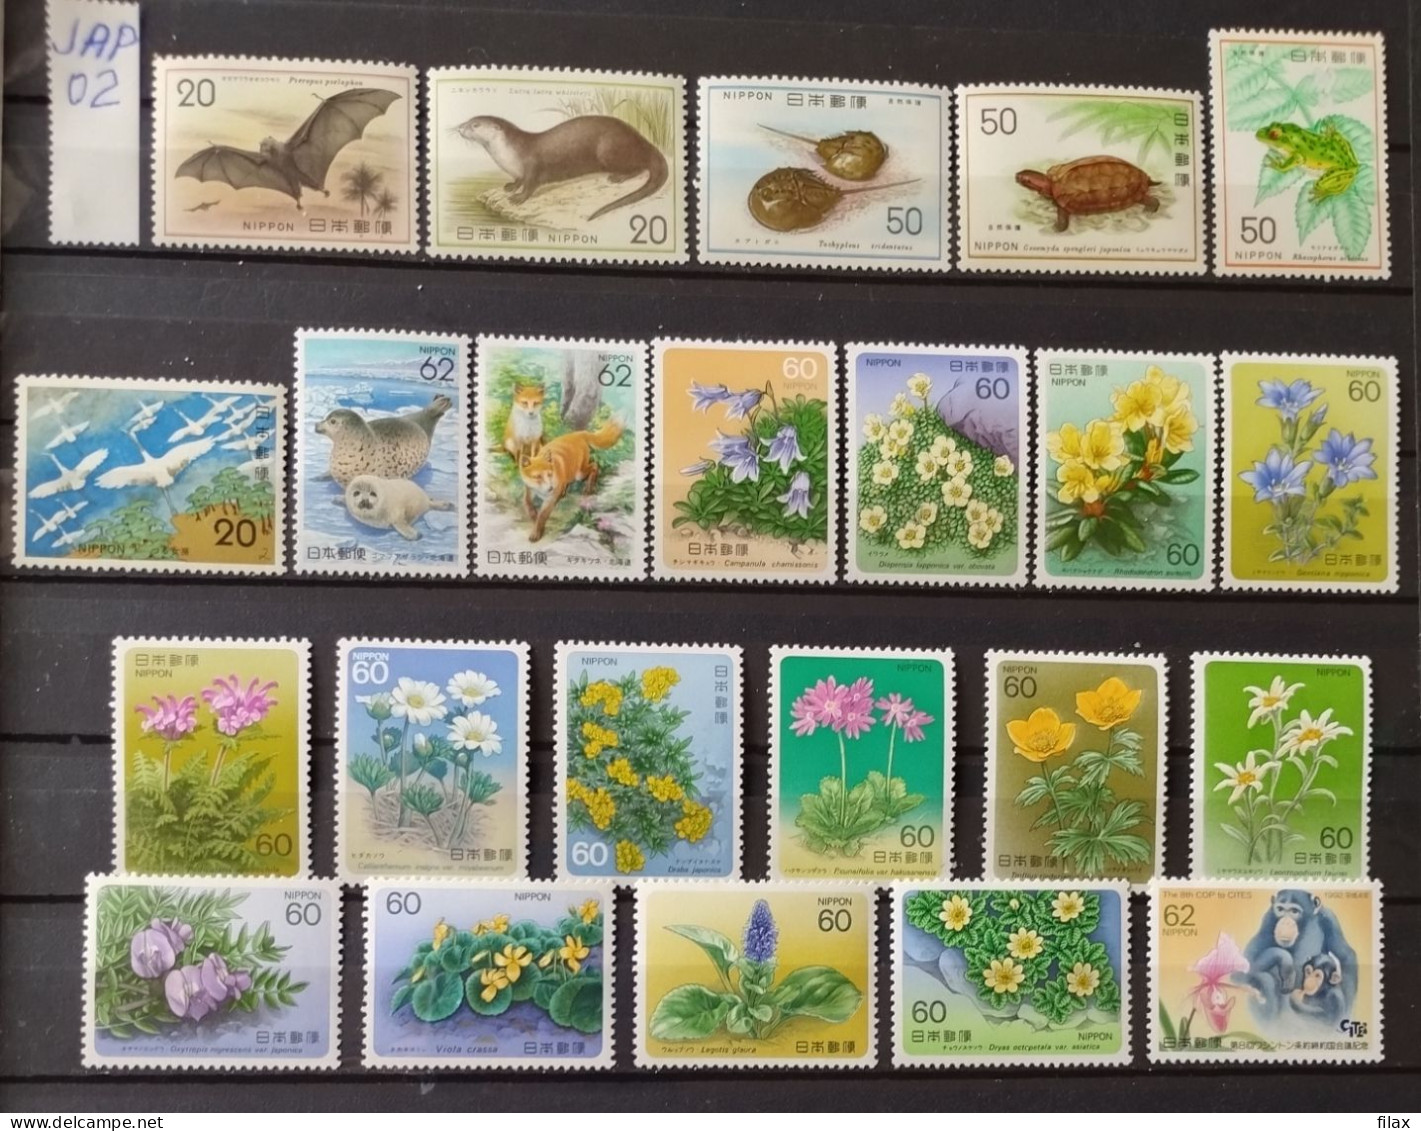 LOT JAP 02 - Japan MNH - Collections, Lots & Series